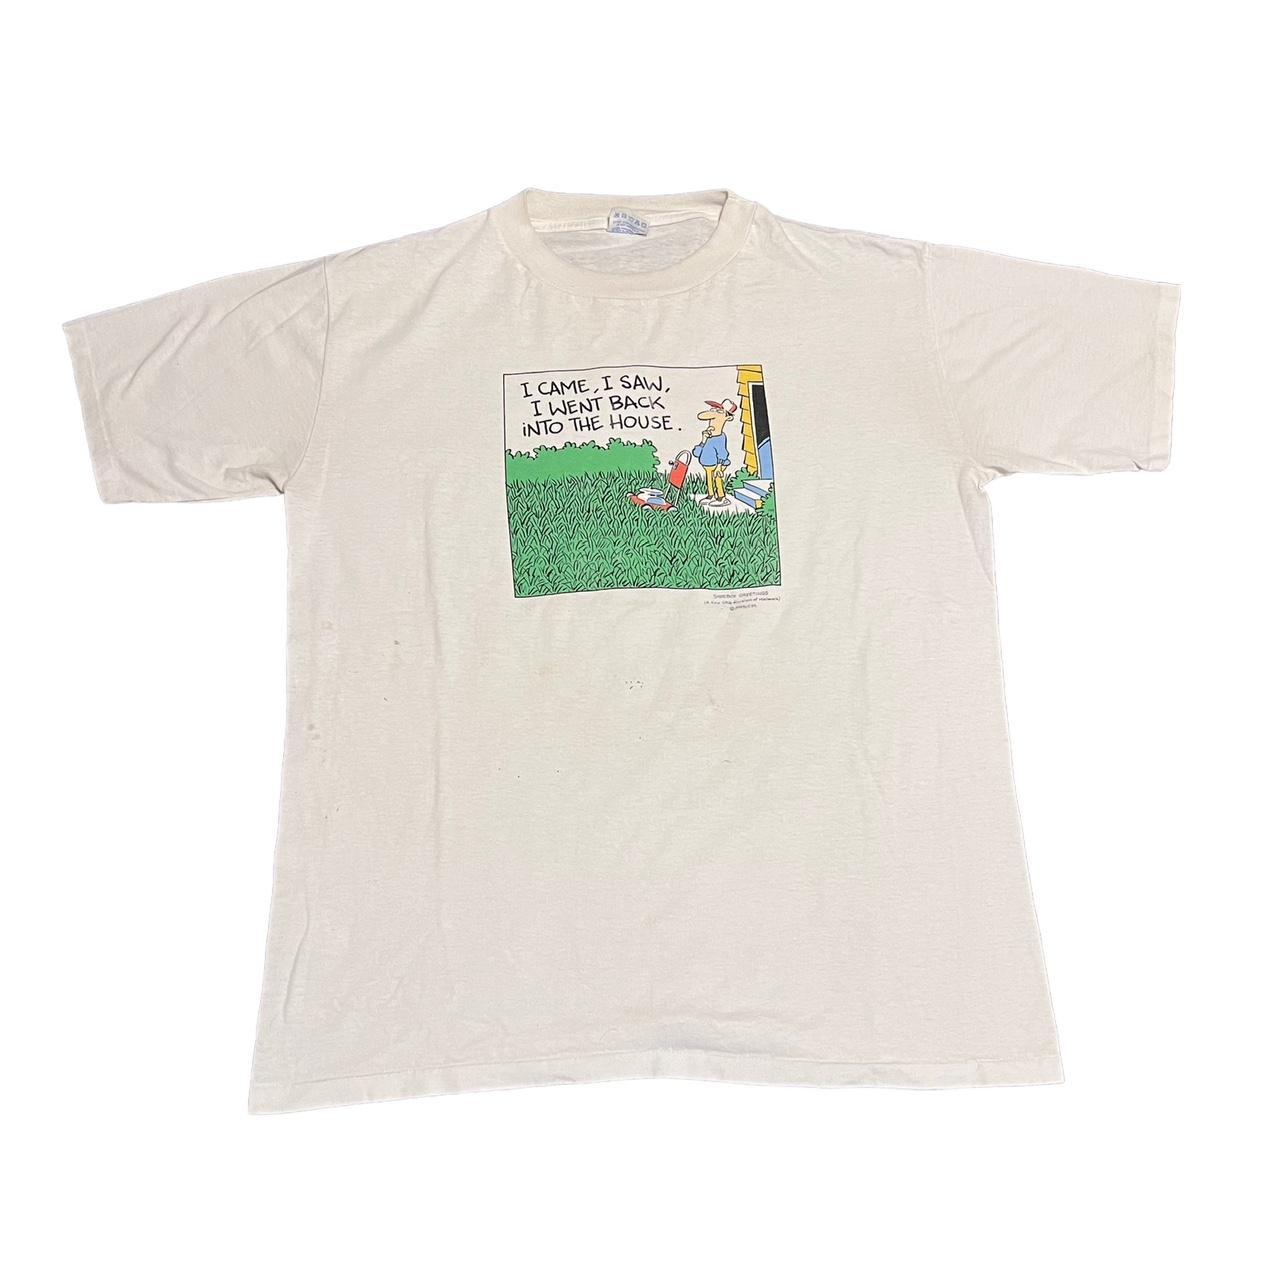 🍤Fun Vintage Louisiana Shrimp T-shirt “Shrimply - Depop